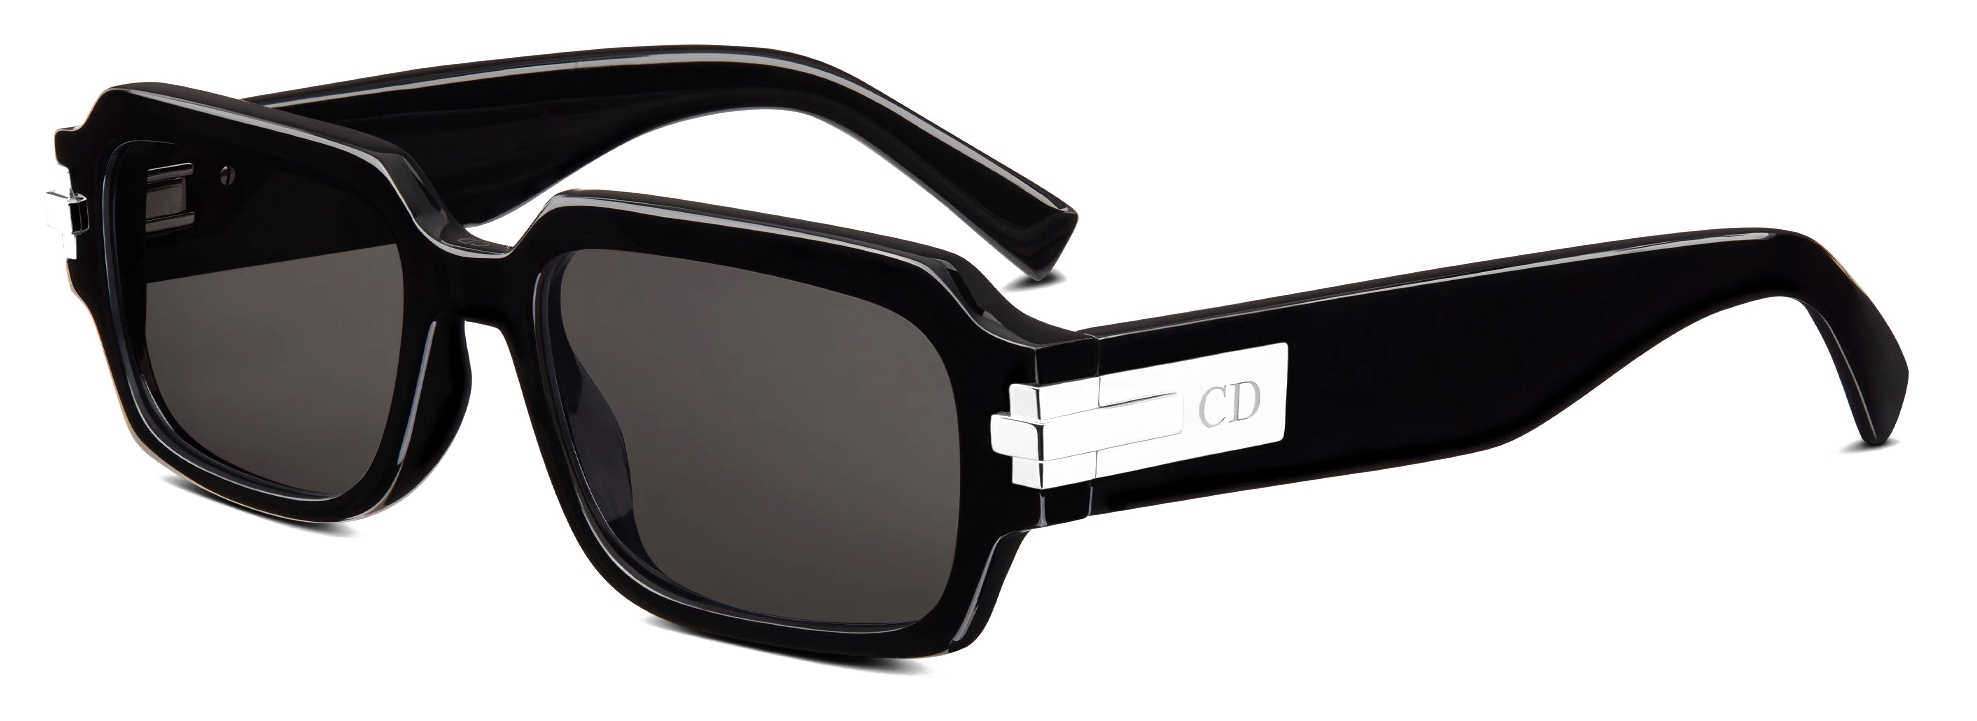 Dior Sunglasses men and women sunglasses luxury brand designer travel   Lazadavn